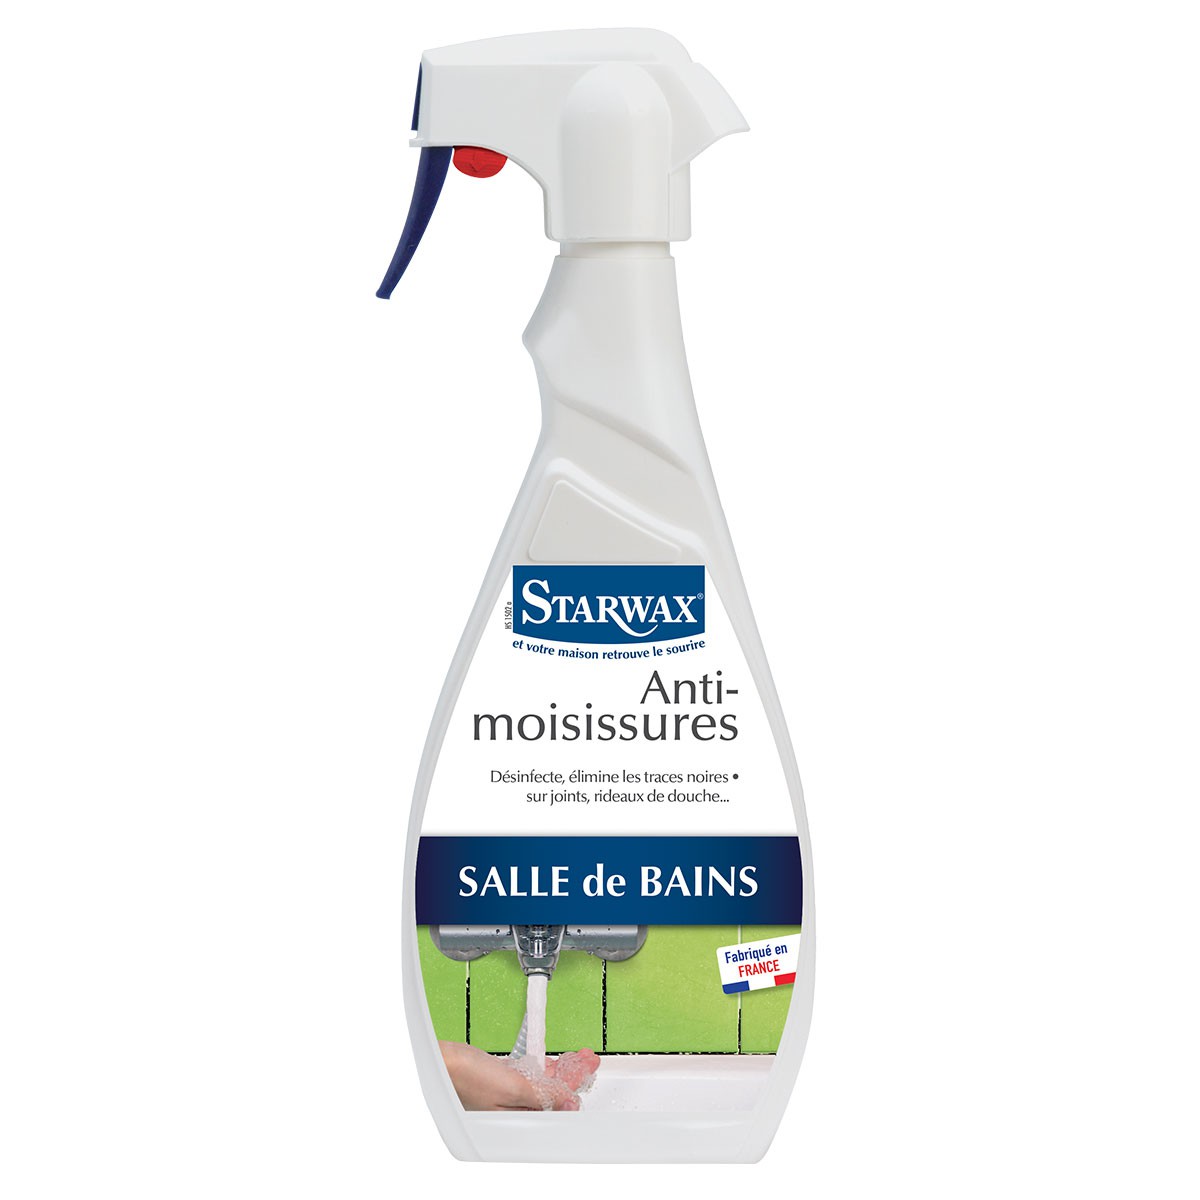 Nettoyant anti-moisissure tout usage, 4 L